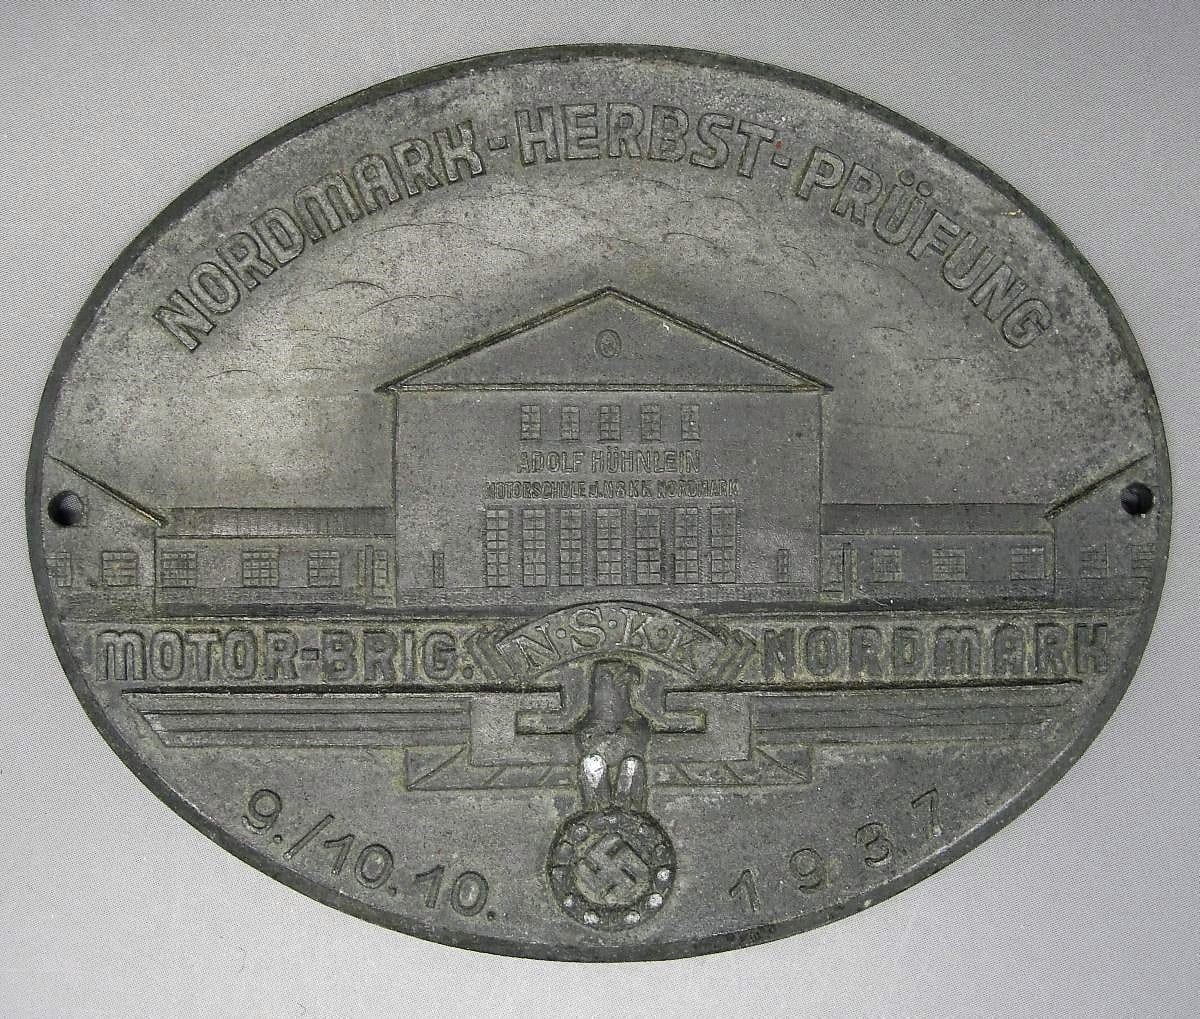 1937 NSKK Motor Brigade Nordmark Adolf Hitler School Table Medal